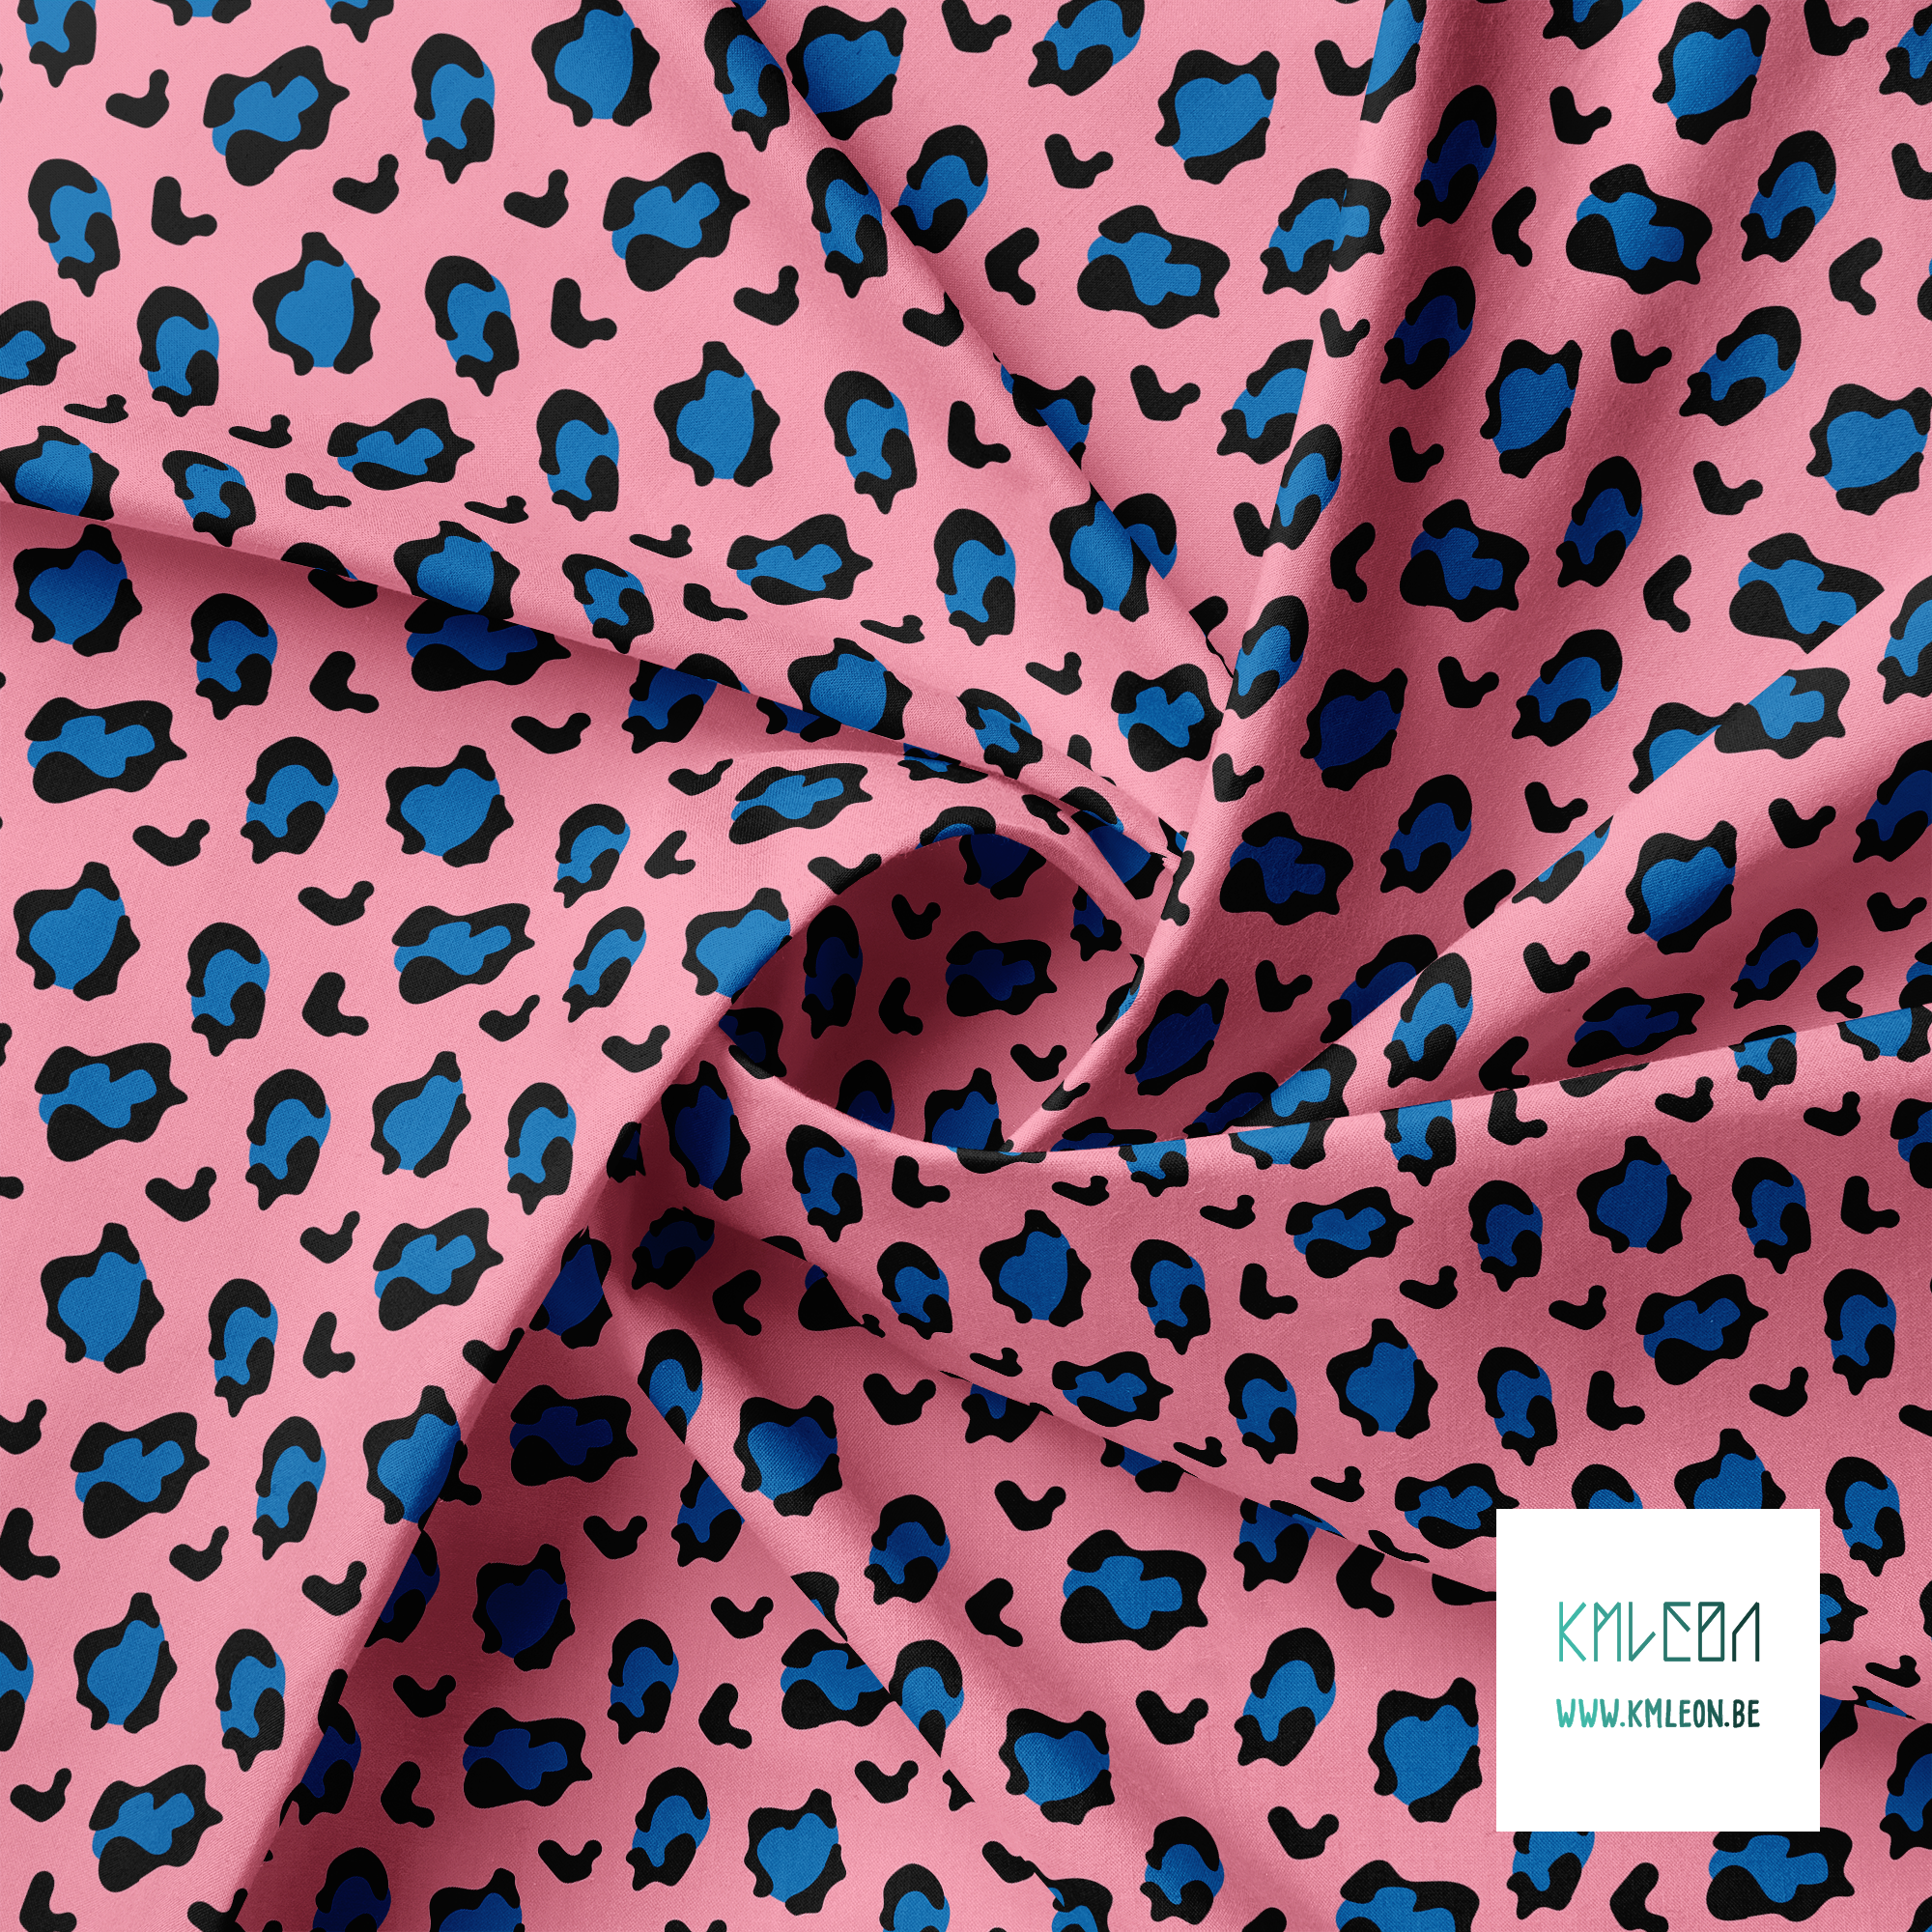 Blue and black leopard print fabric